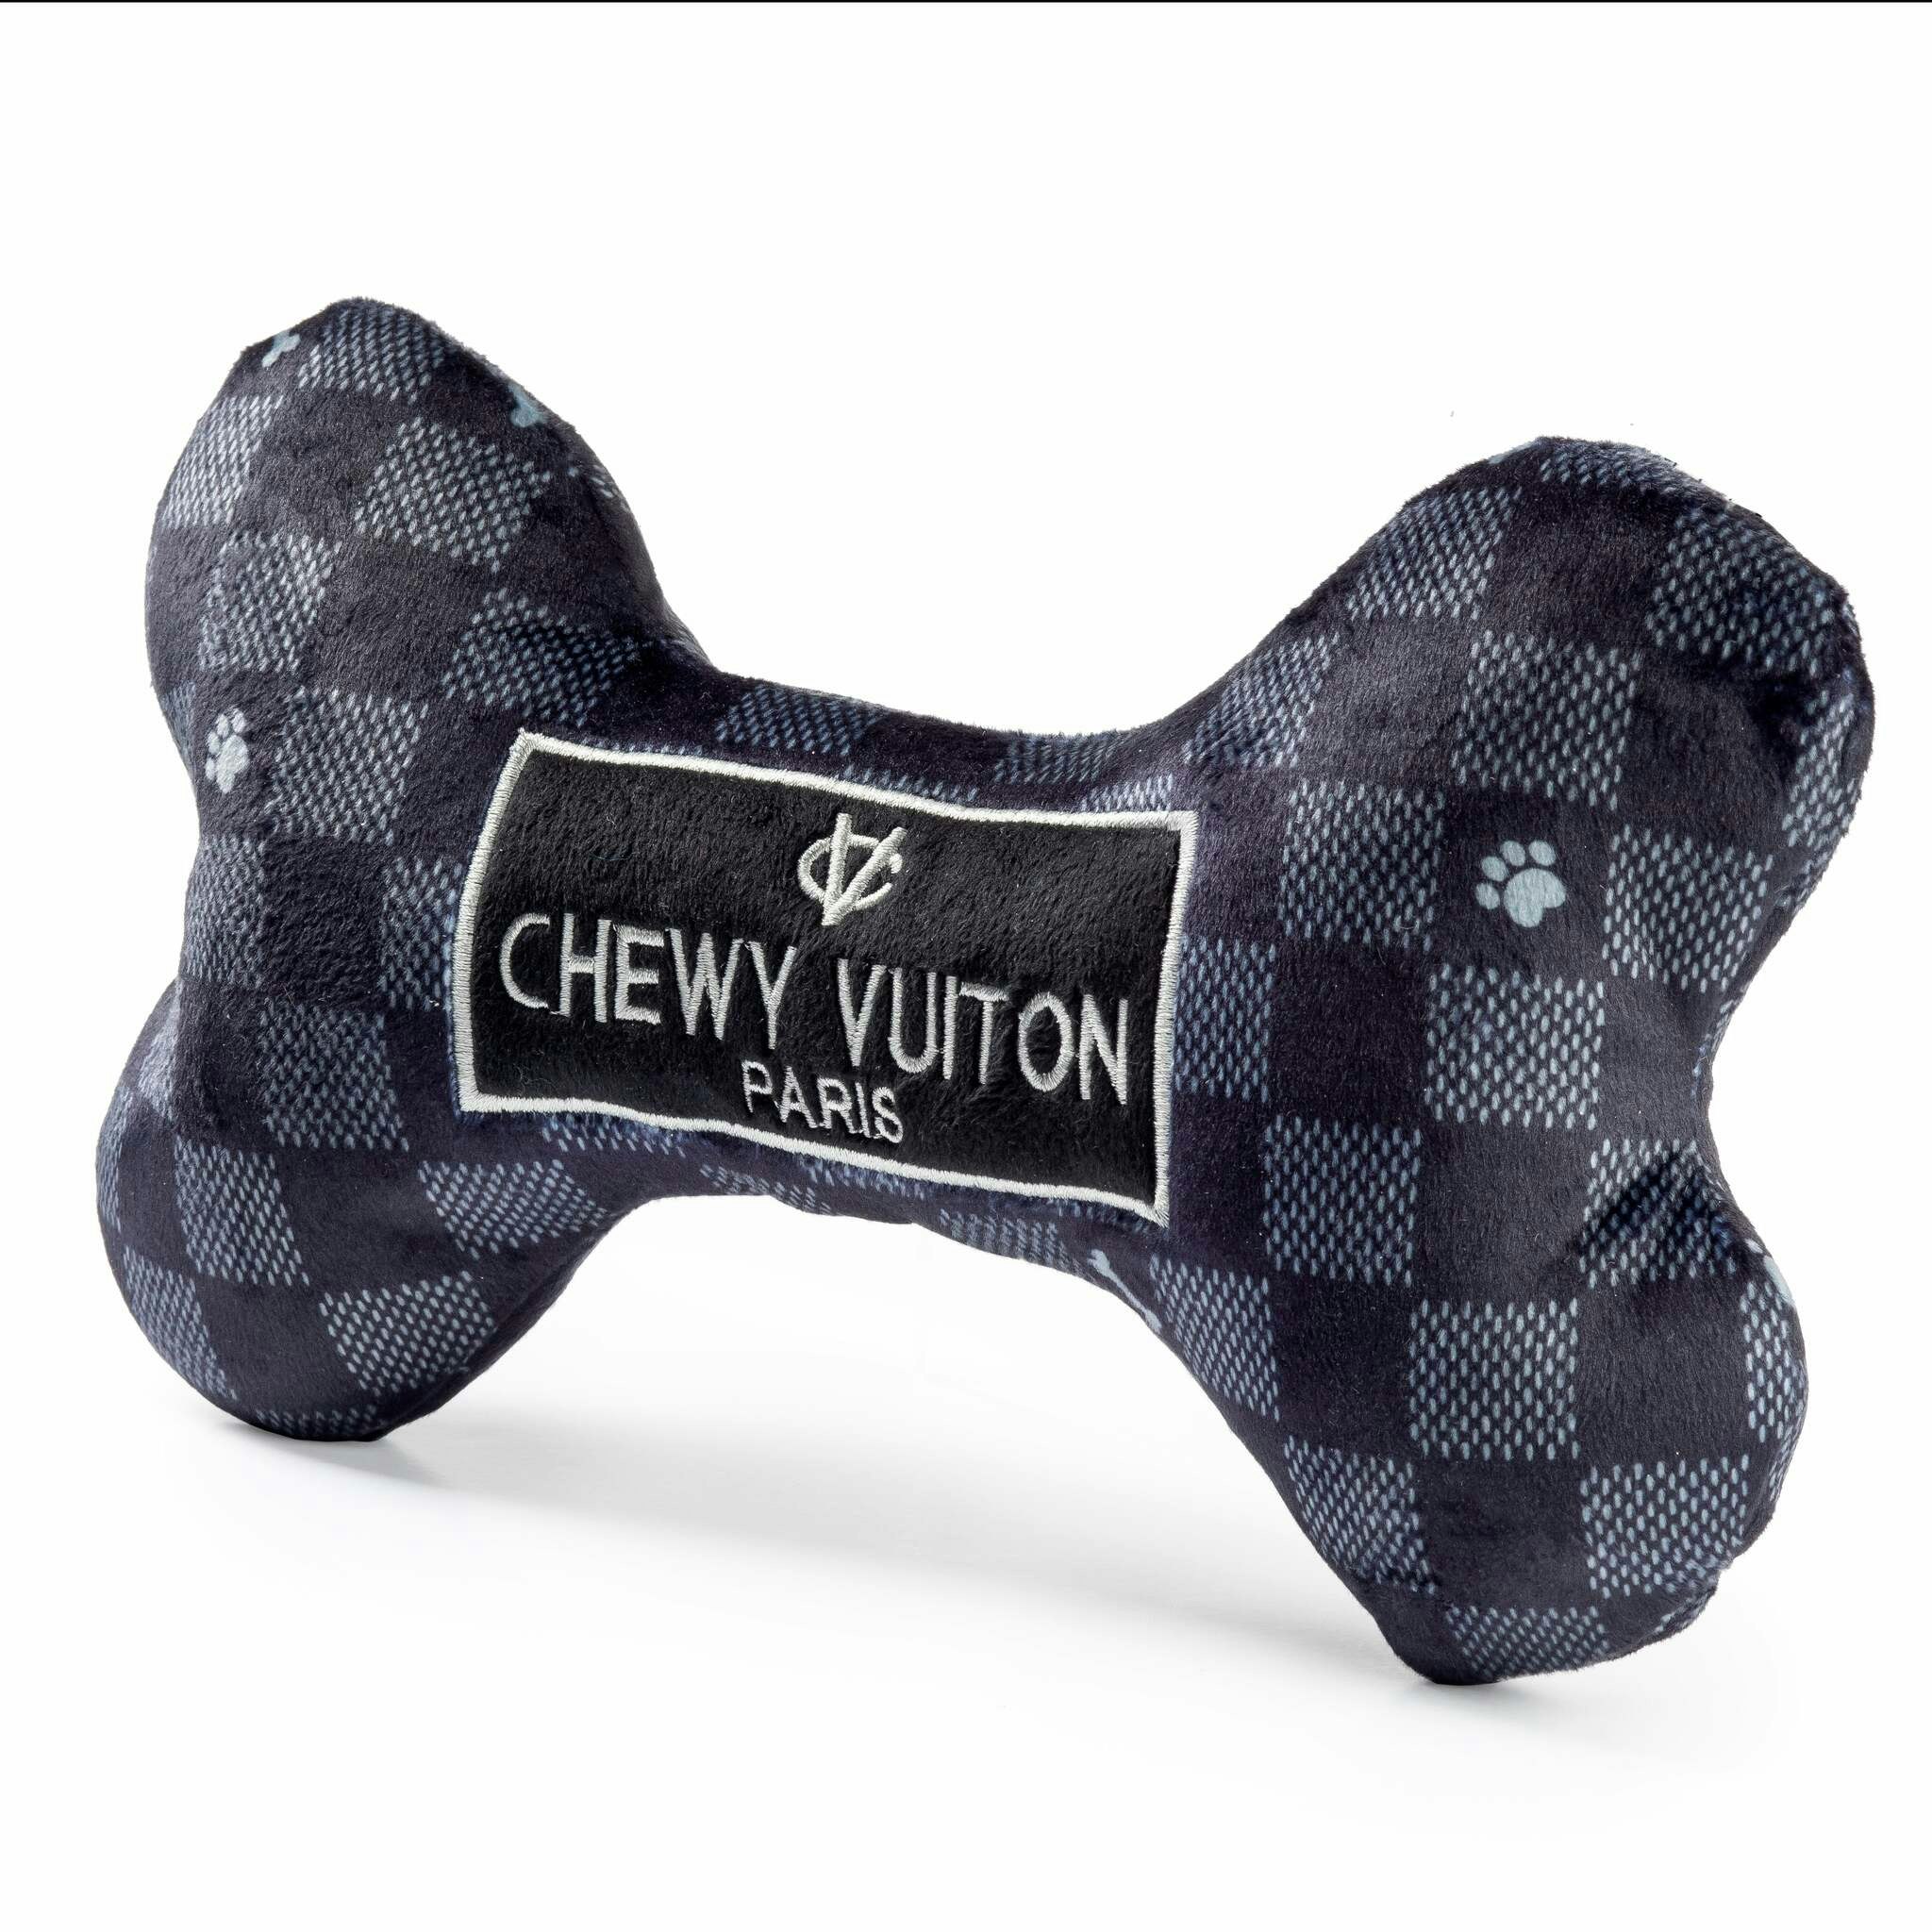 Chewy Vuiton Black checker Bone